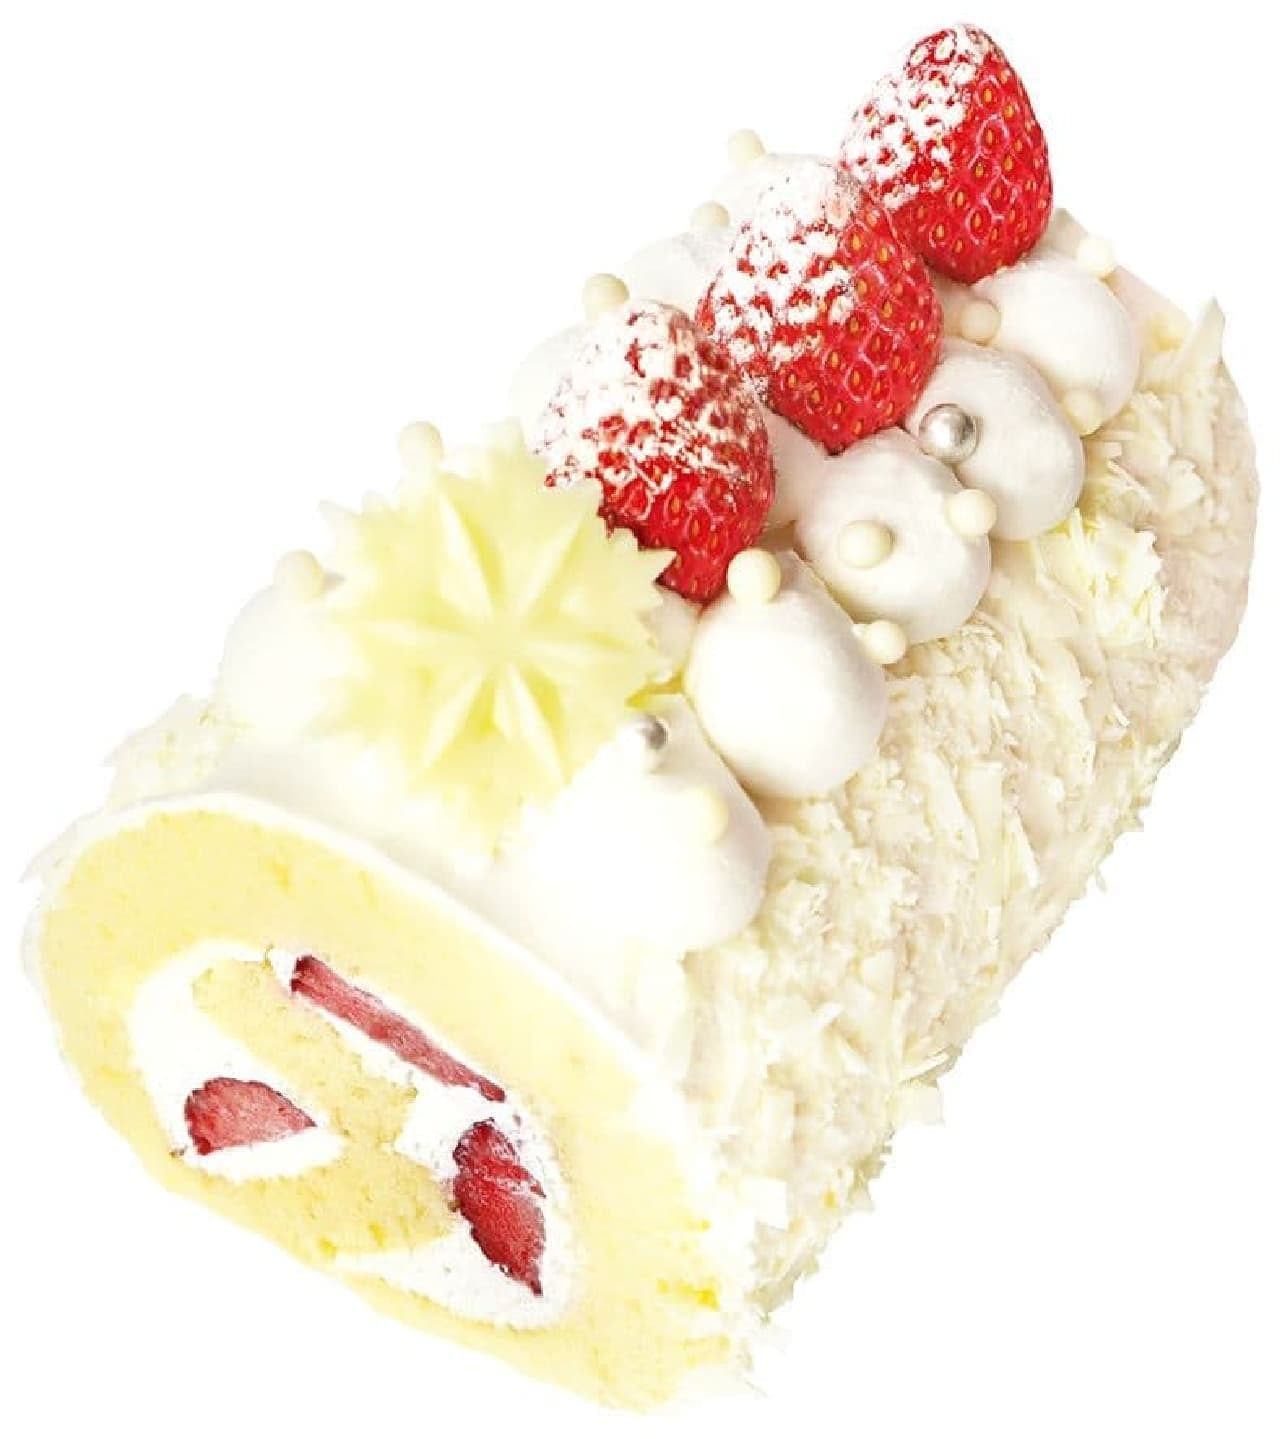 Fujiya pastry shop "Snowy strawberry premium roll cake"